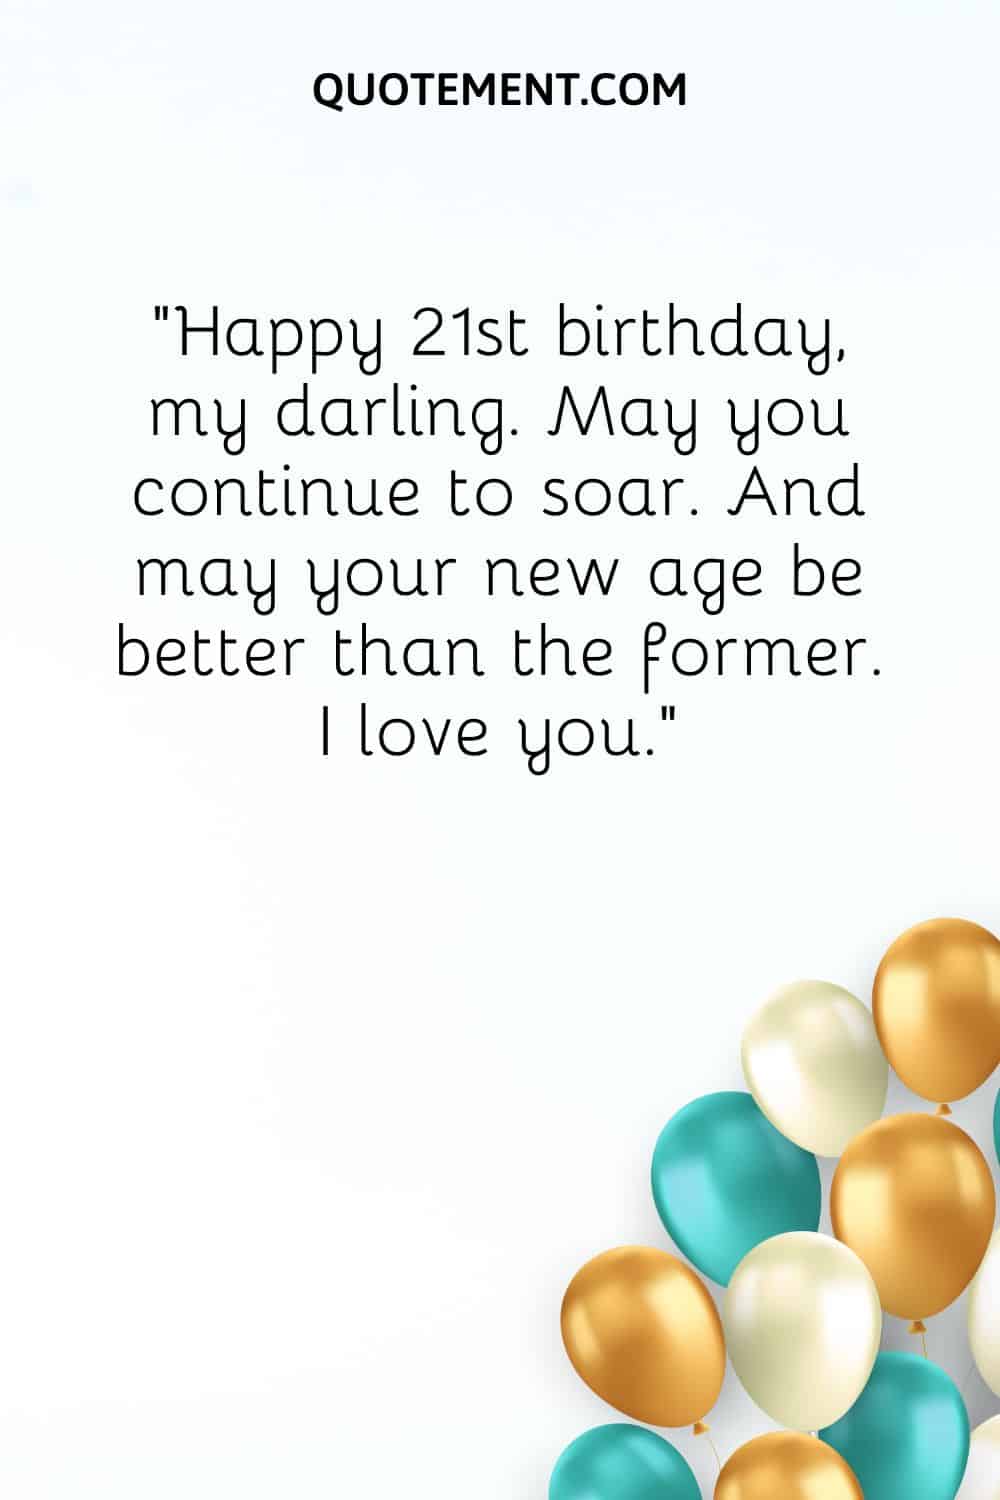 Happy 21st birthday, my darling